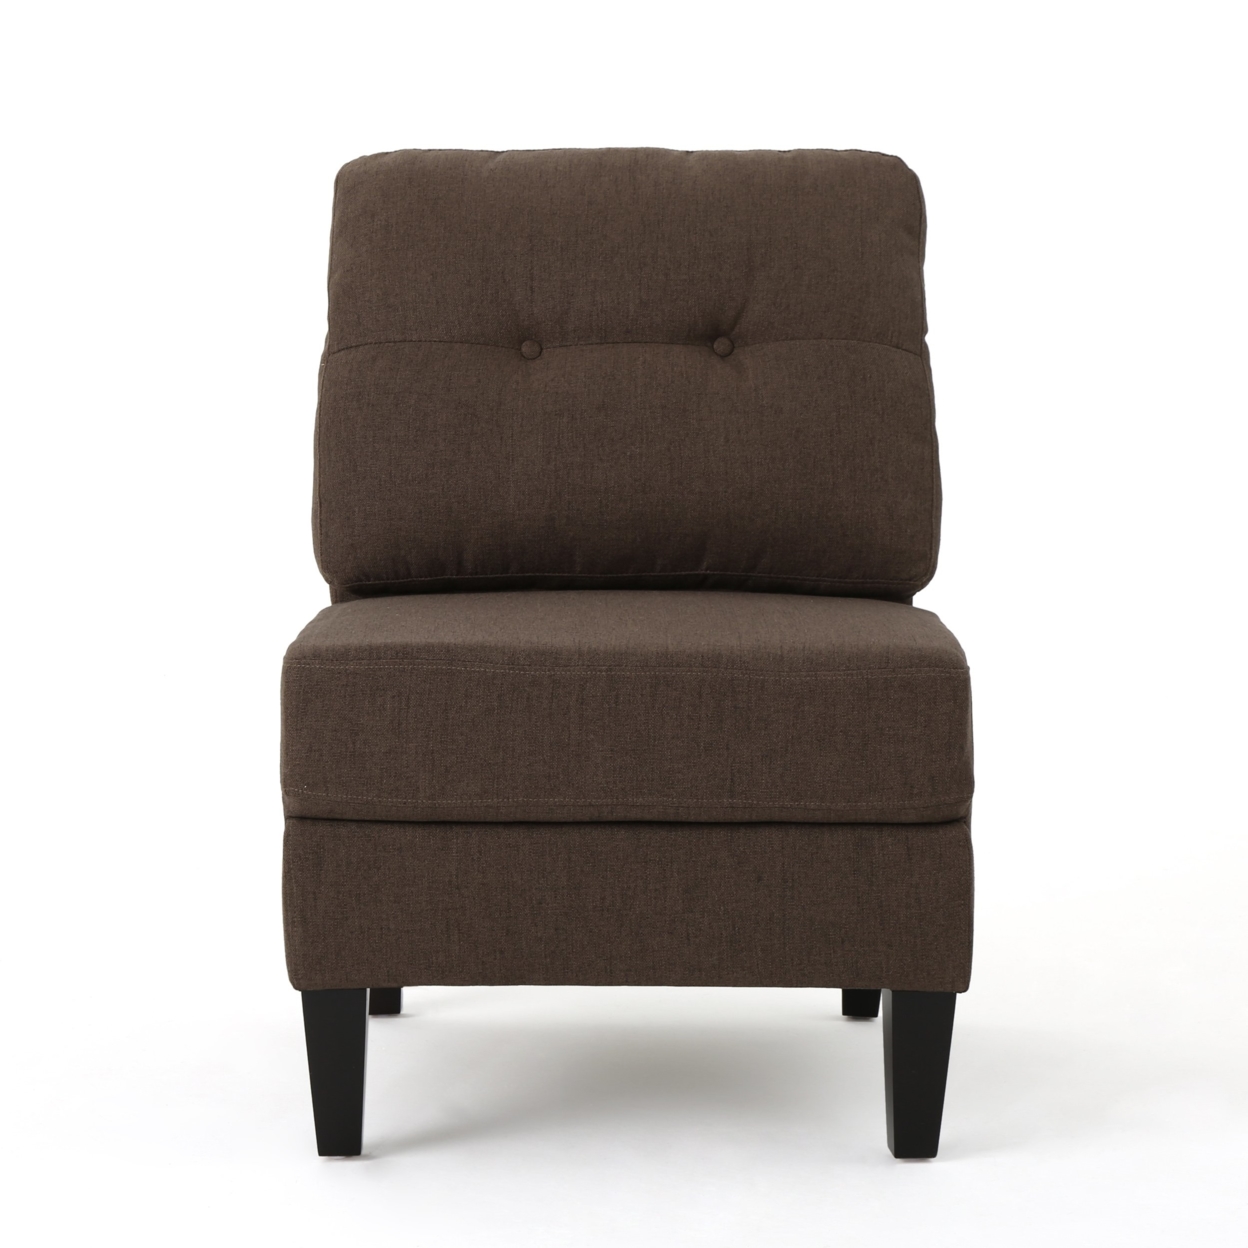 Niya Mid Century Modern 10 Piece Fabric U-Shaped Sectional Sofa - Dark Gray